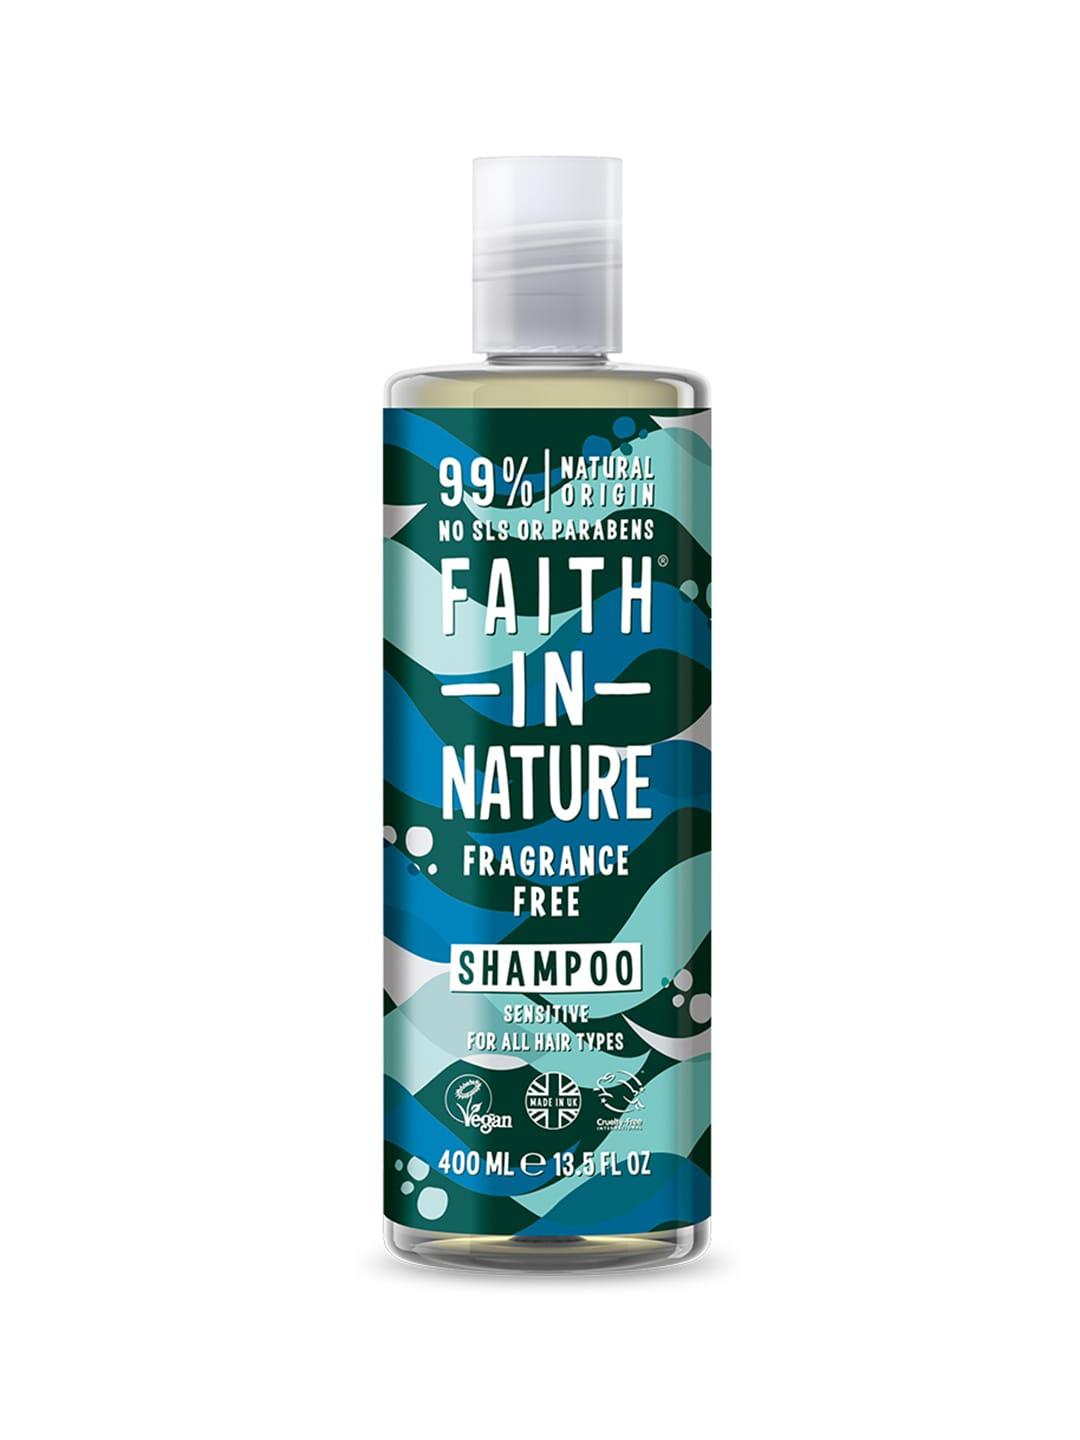 faith-in-nature-fragrance-free-shampoo---sensitive-for-all-hair-types---400ml